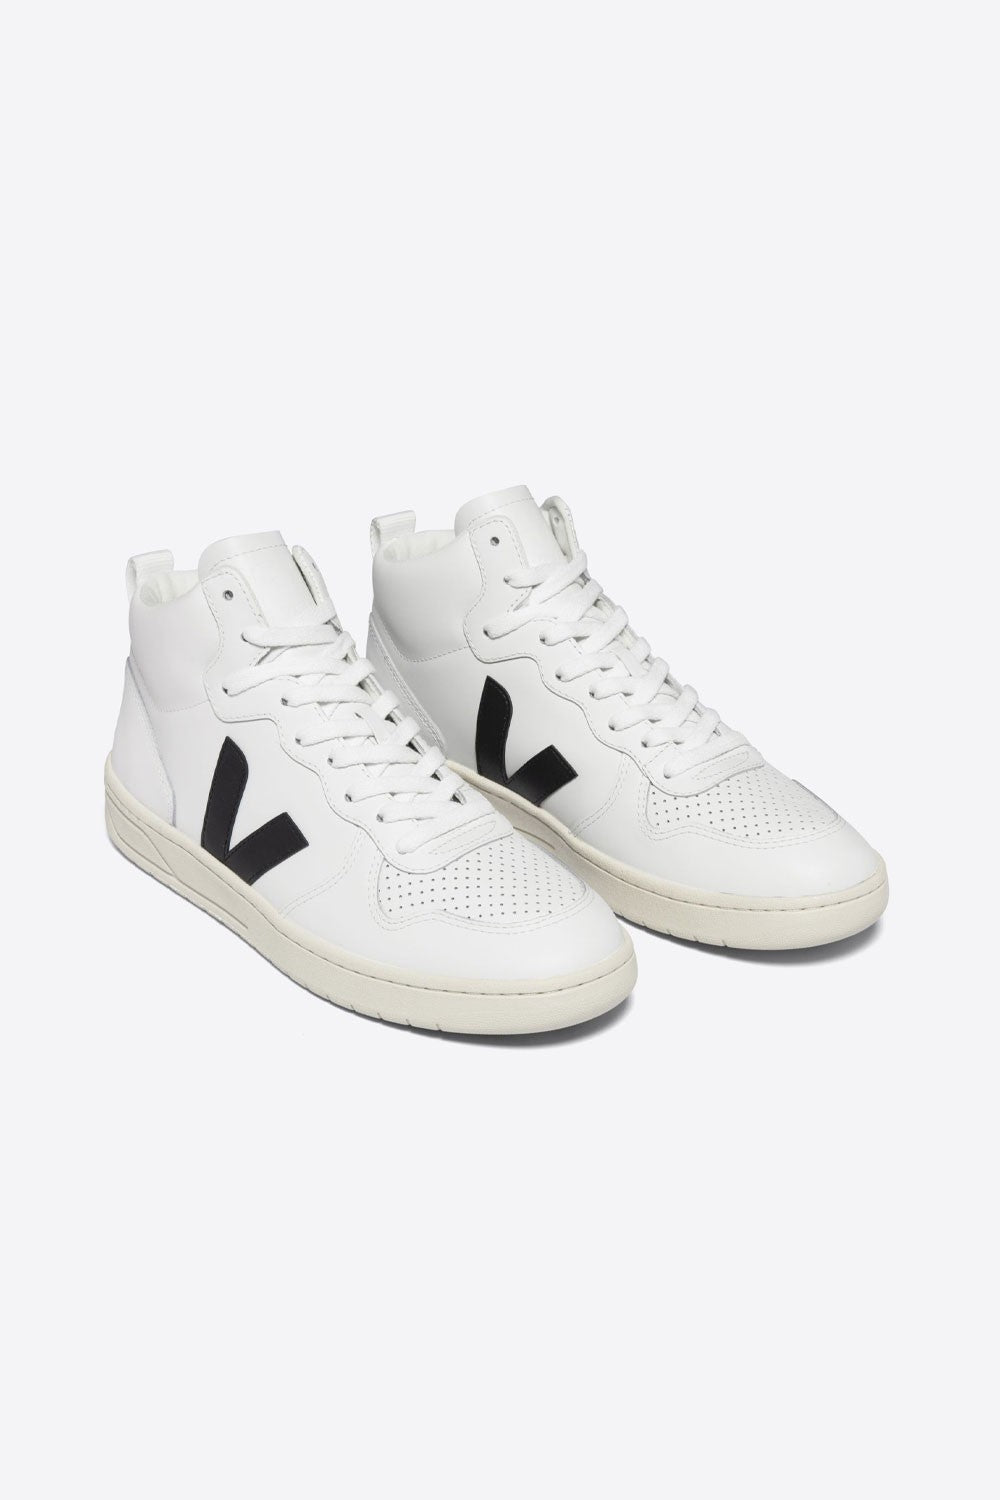 V 15 White Black Leather Sneakers